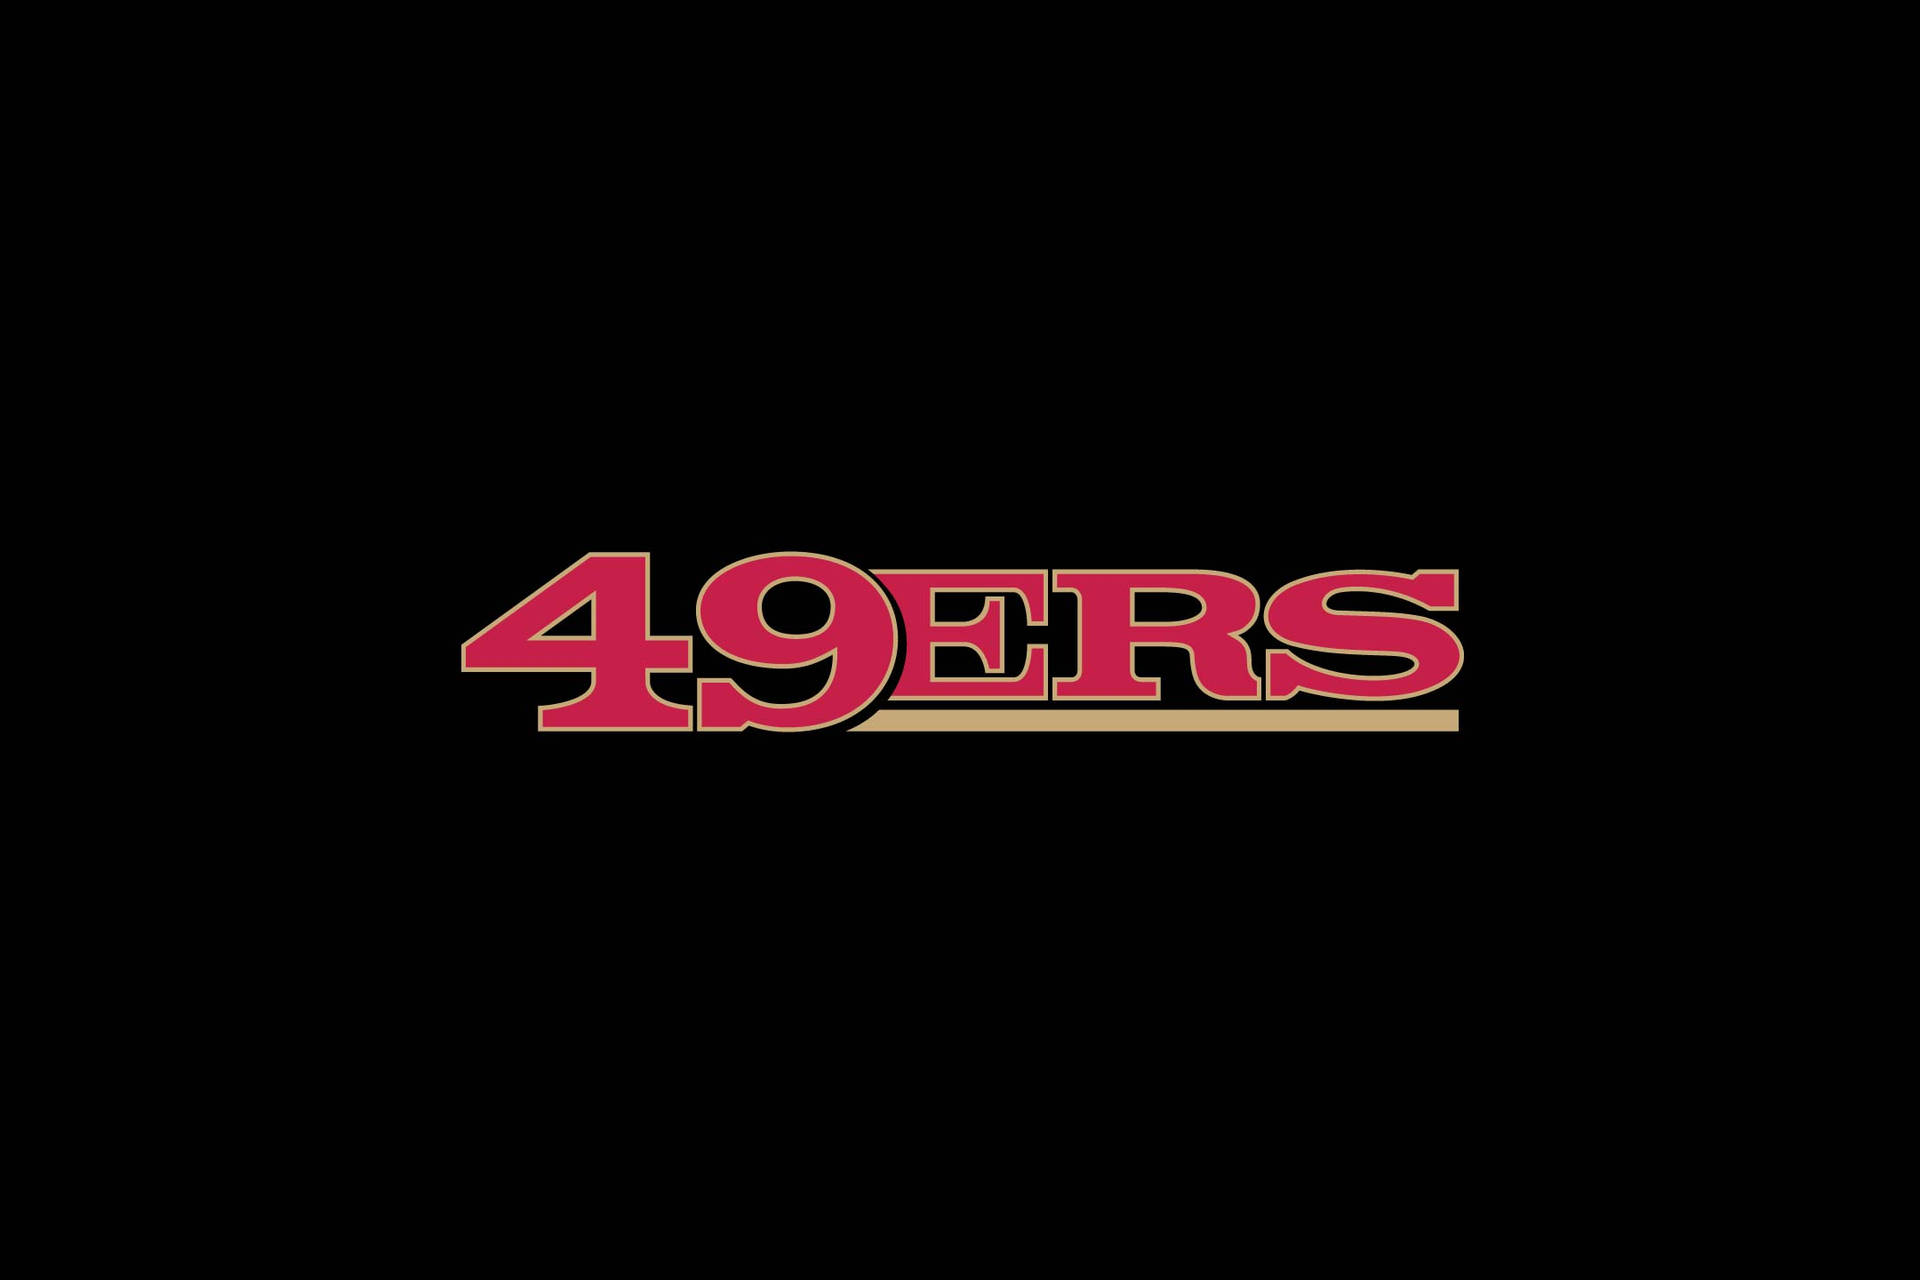 Minimalist 49ers Logo In Black Background